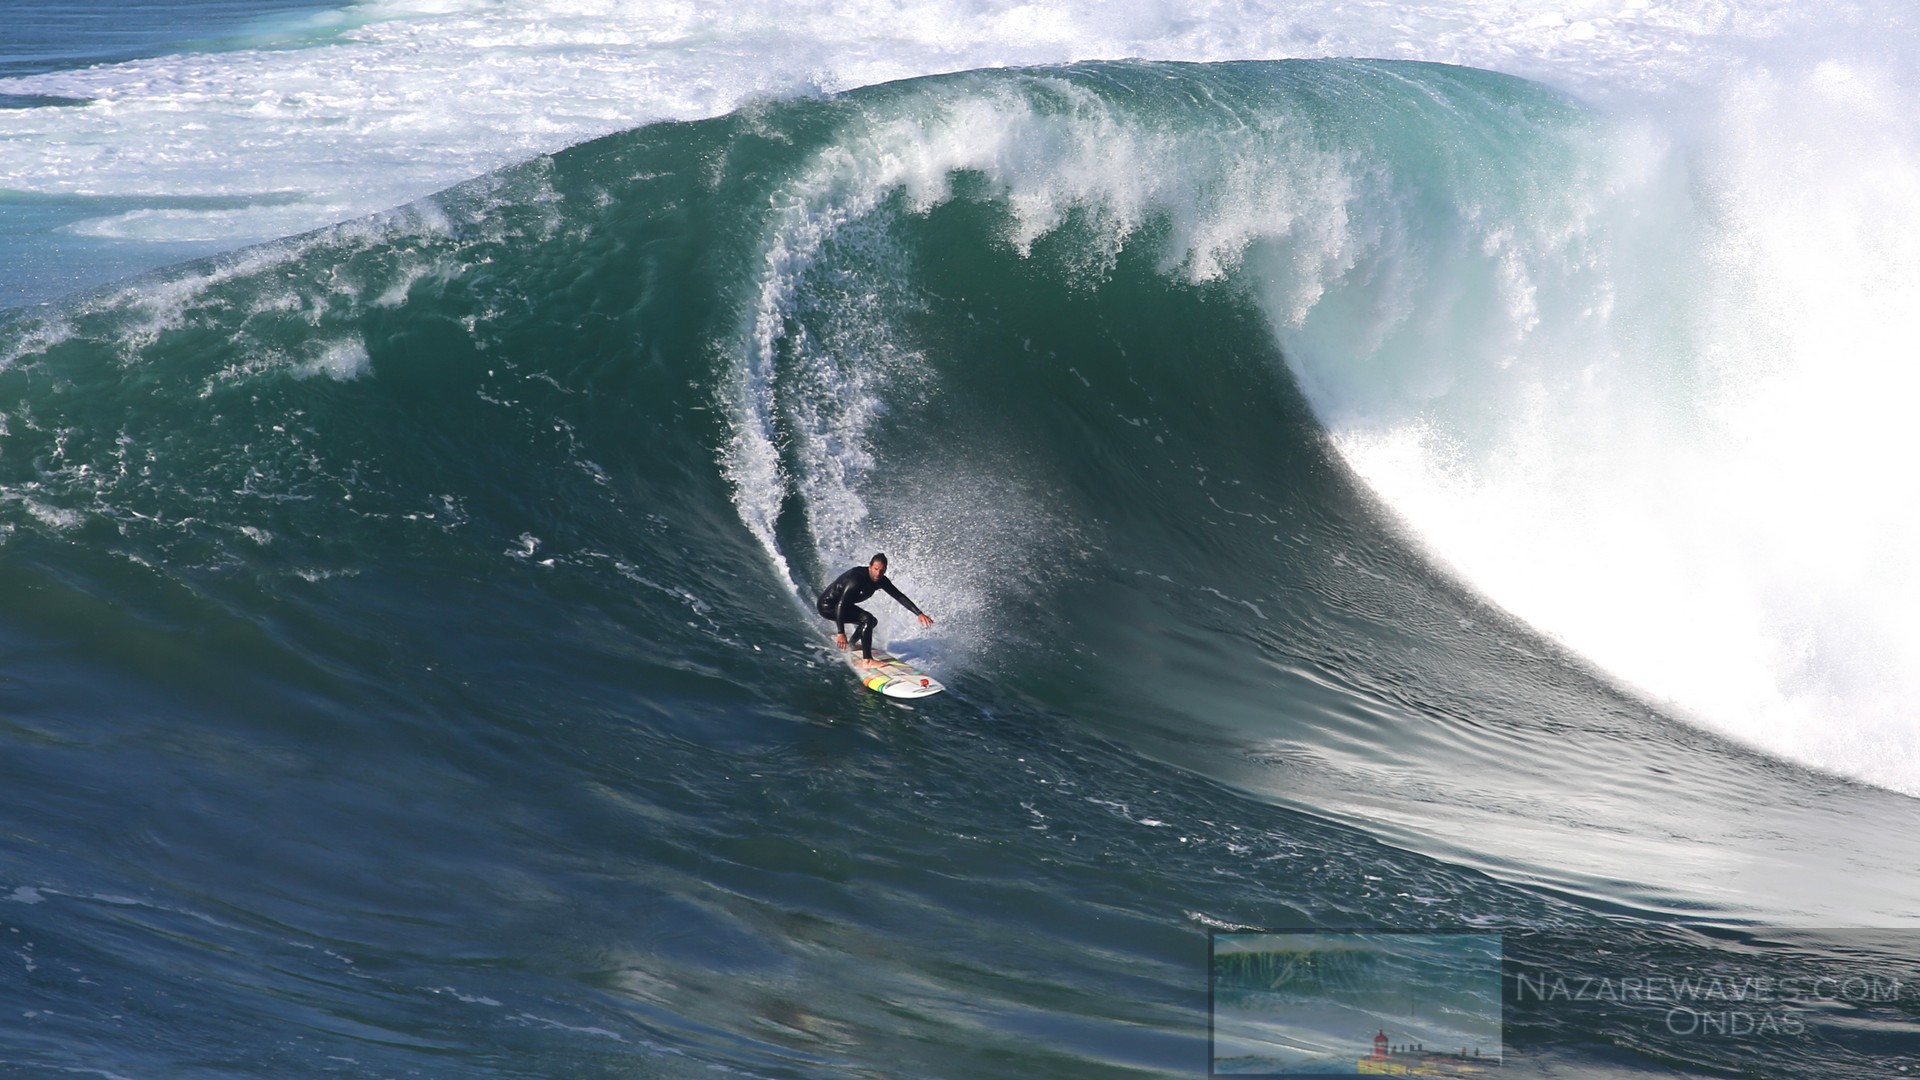 Surf paddling at Nazaré - 21 December 2015 - NEWS - Nazaré Big Waves ...